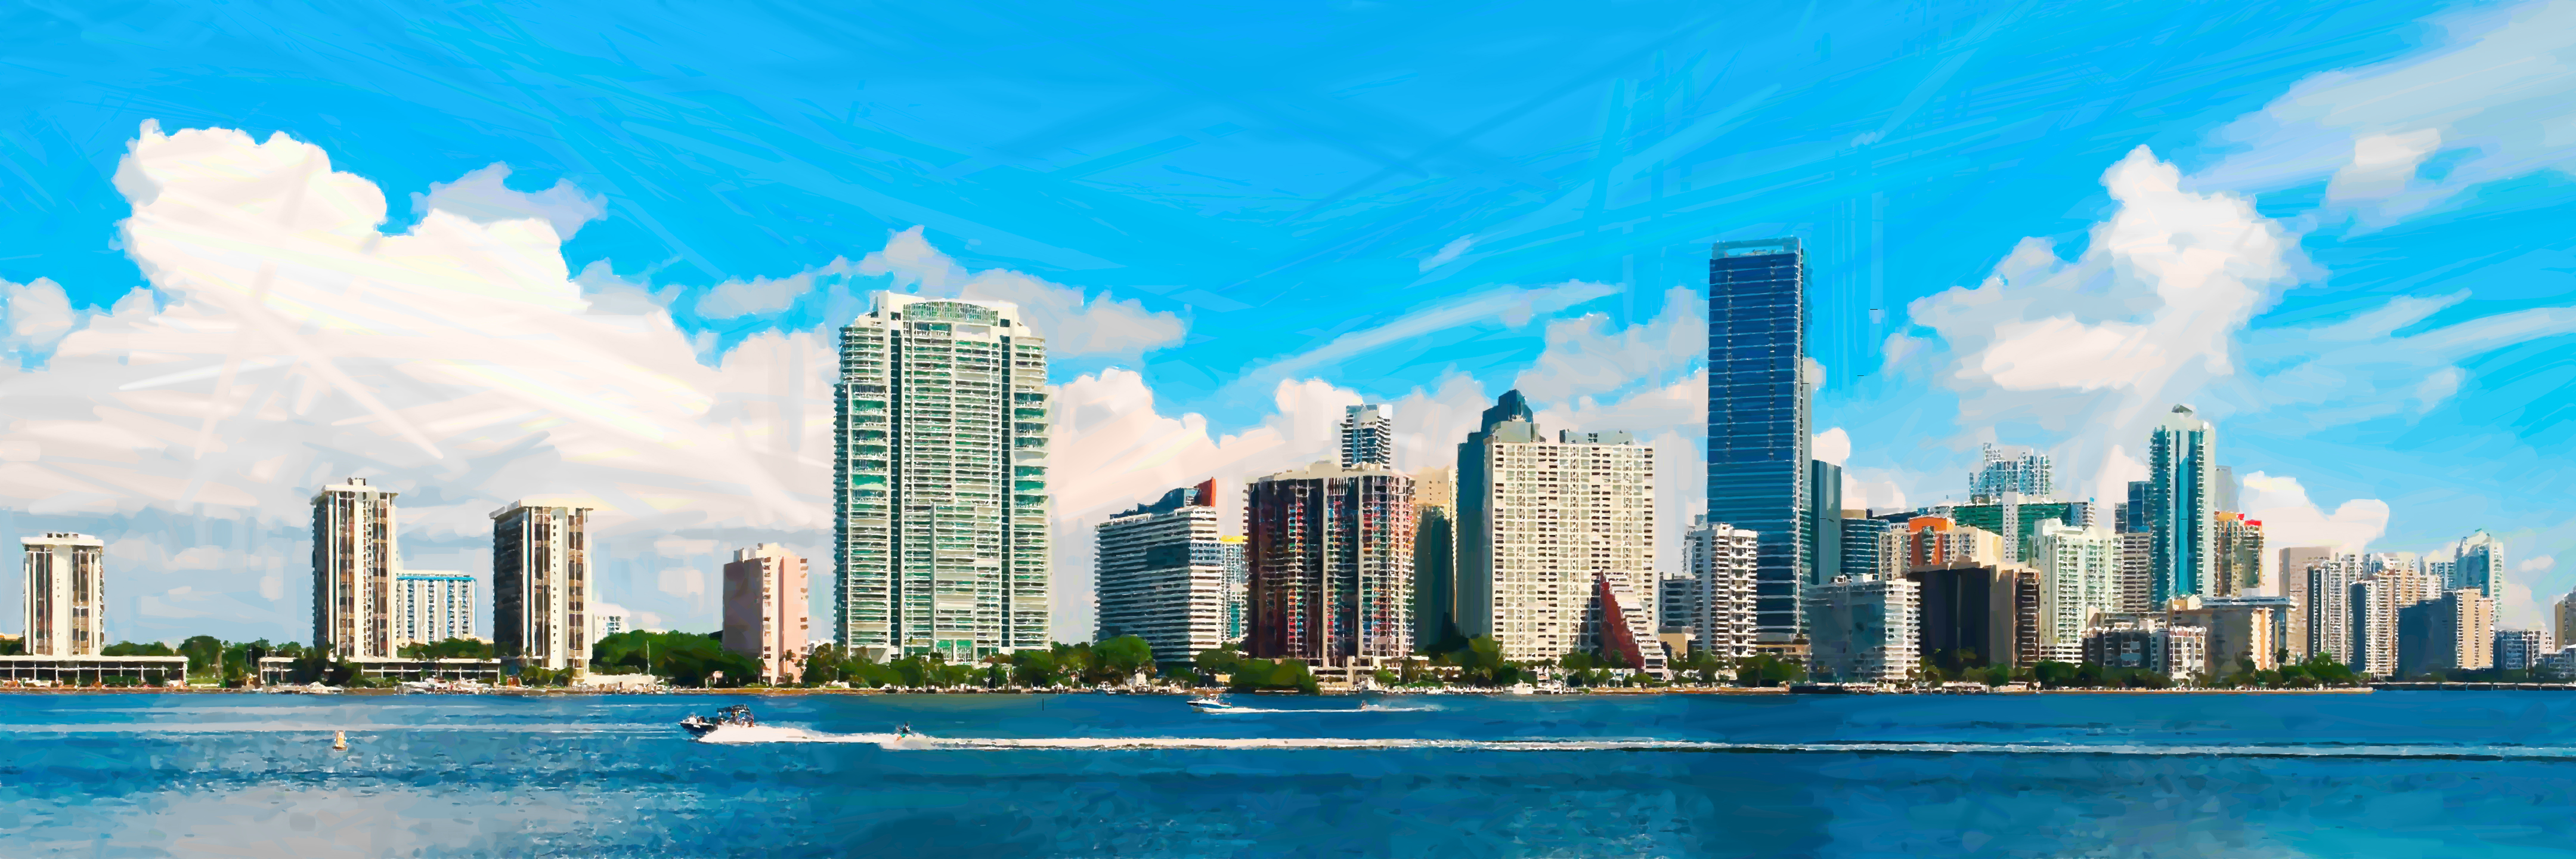 Miami Panoramic by maXX2707